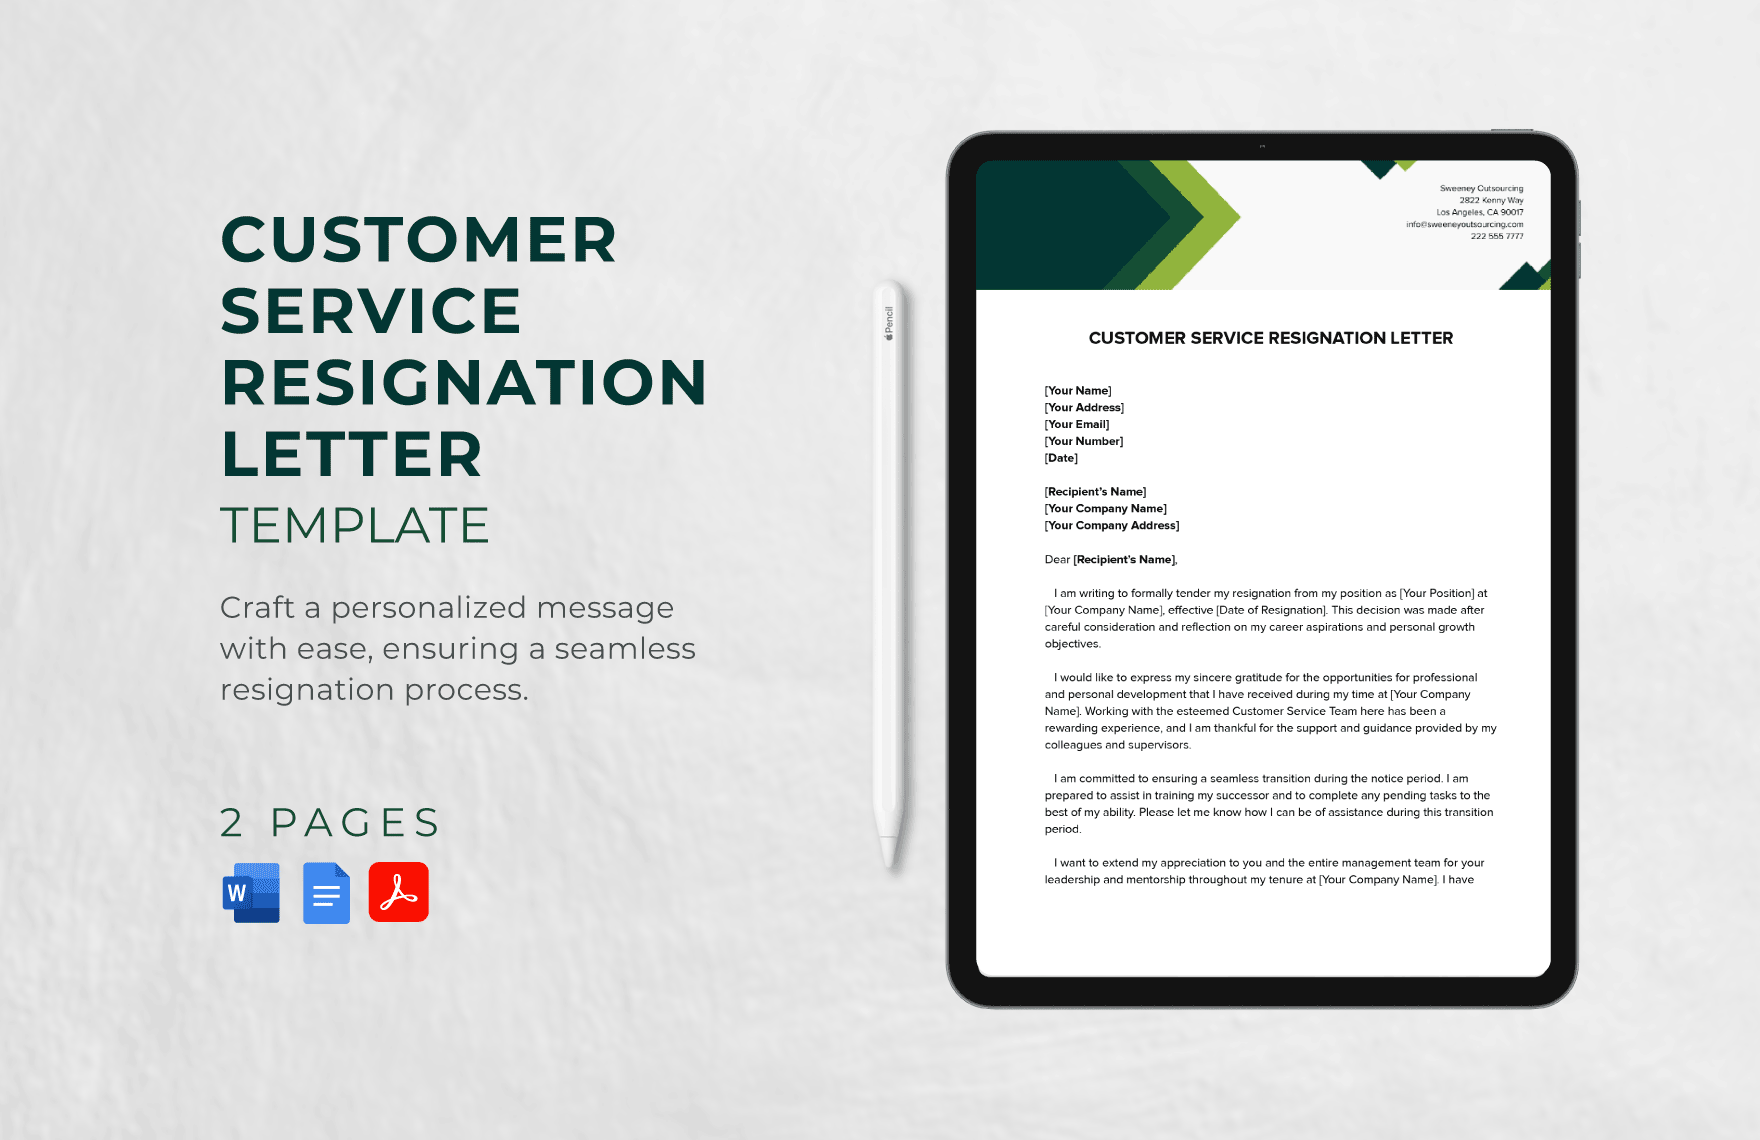 Customer Service Resignation Letter Template in Word, Google Docs, PDF